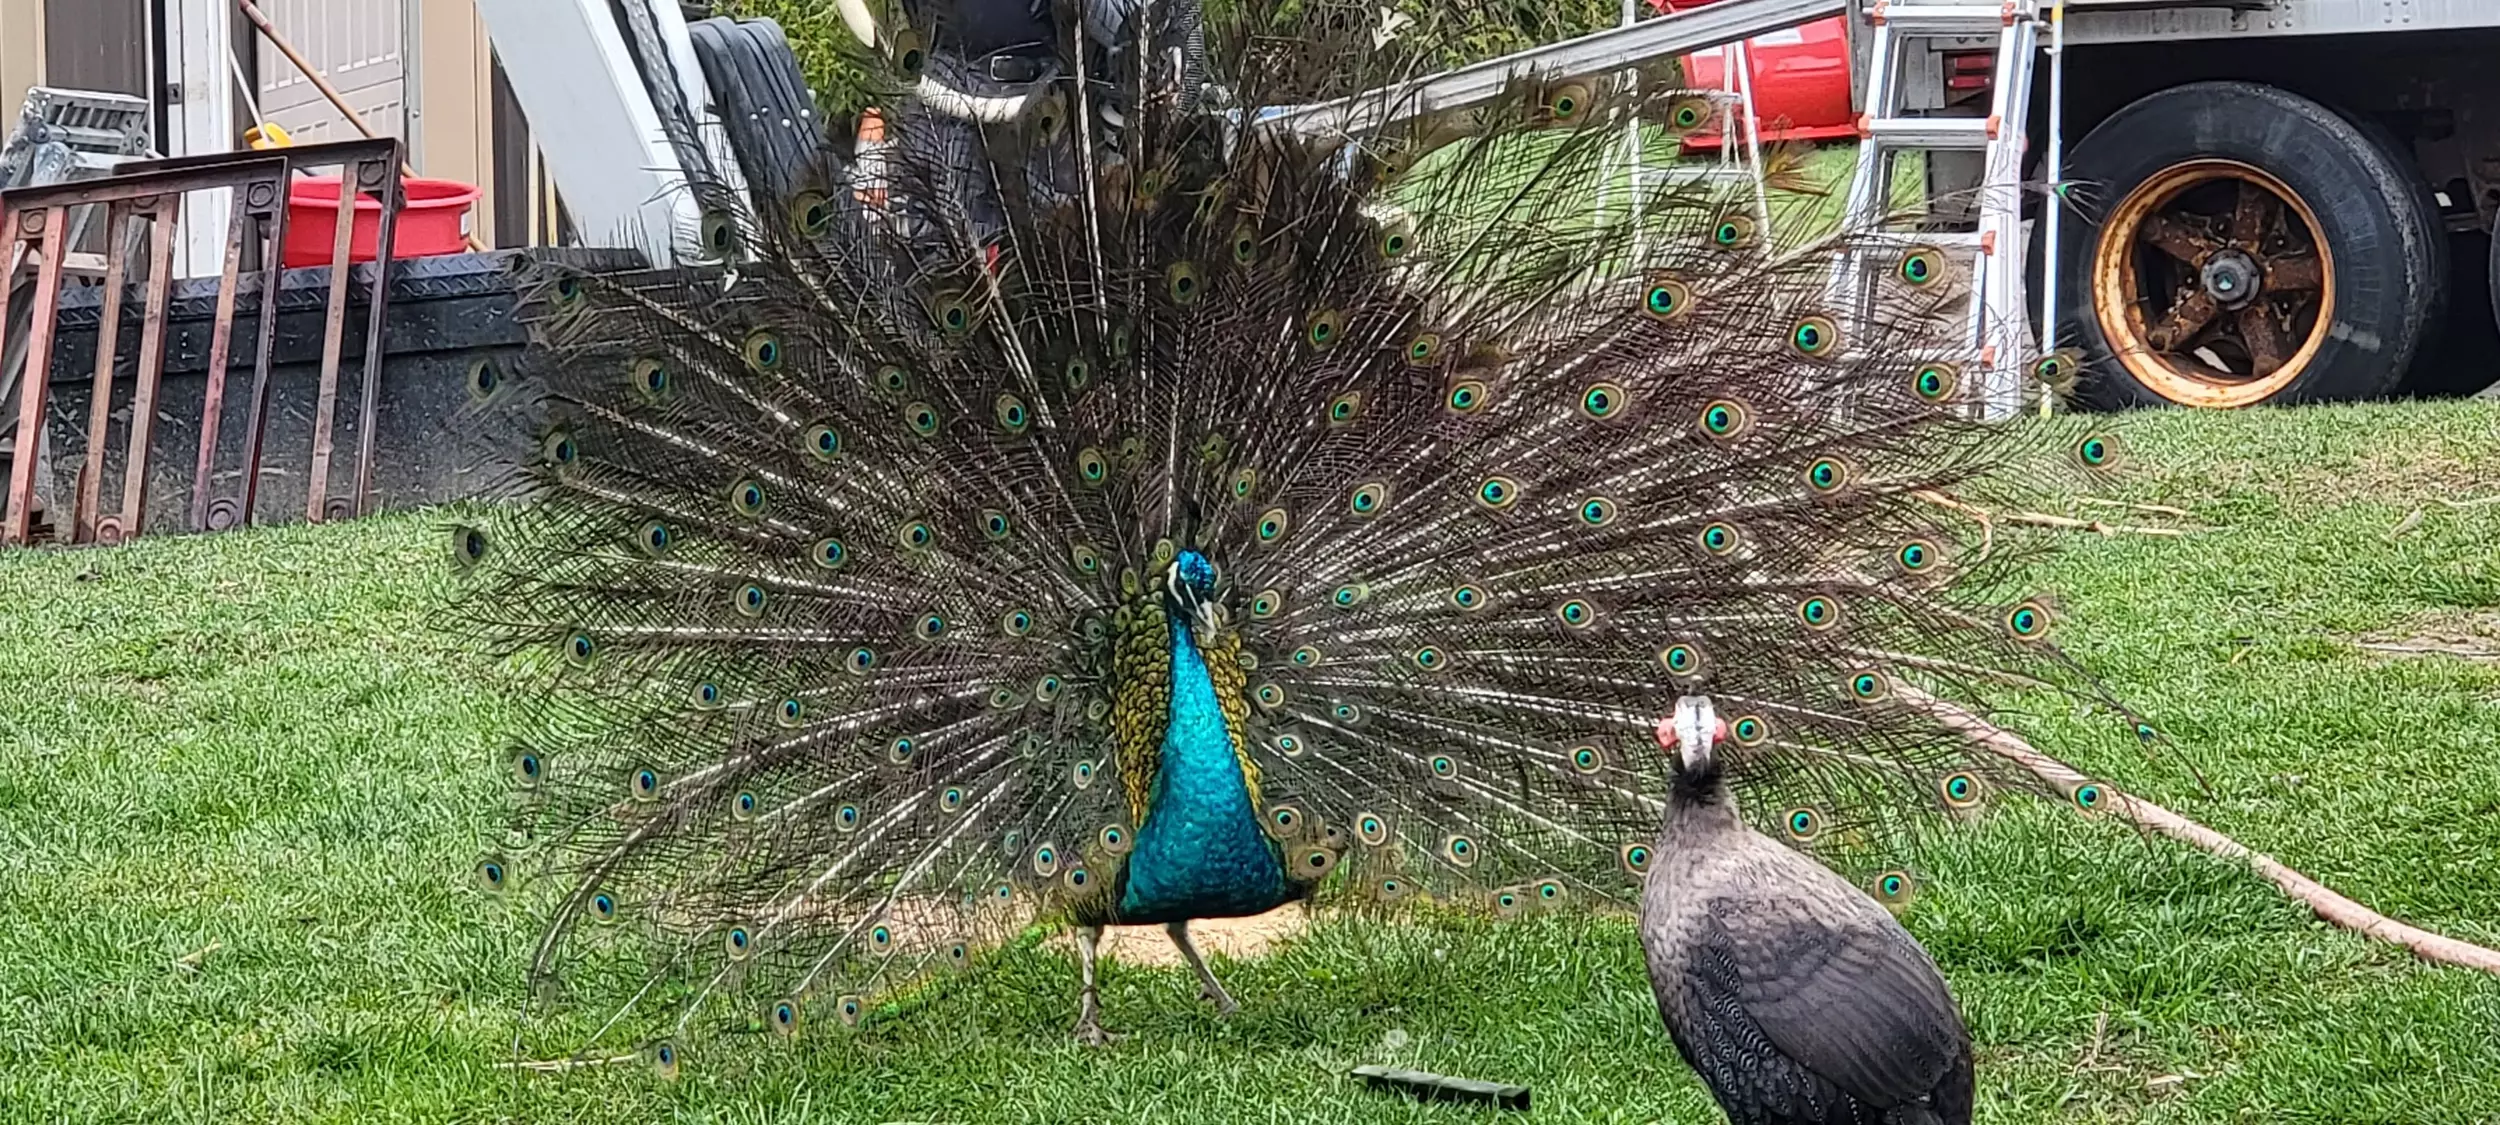 Peacock chega no Brasil ainda em 2022 (Rumor) - Hypando